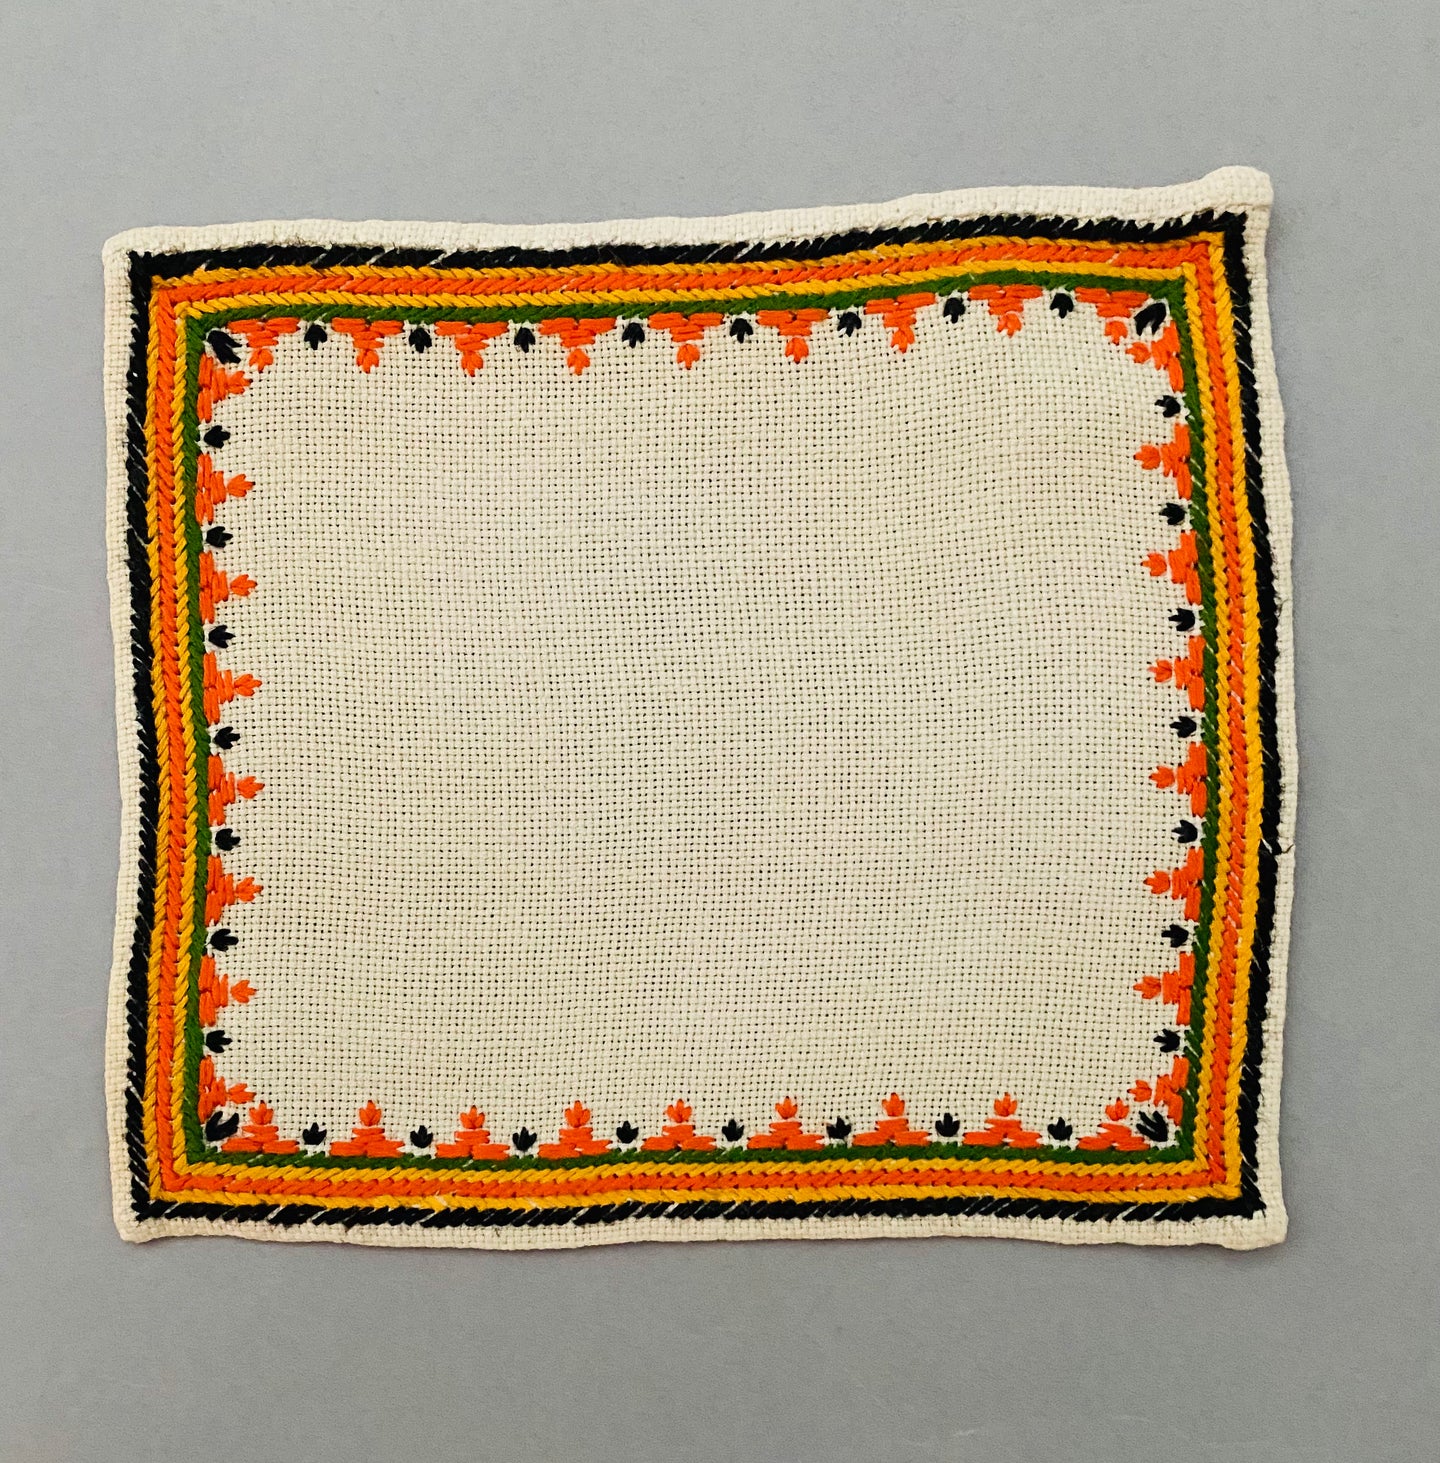 Embroidered  Servetka with nyzynka embroidery  6.5